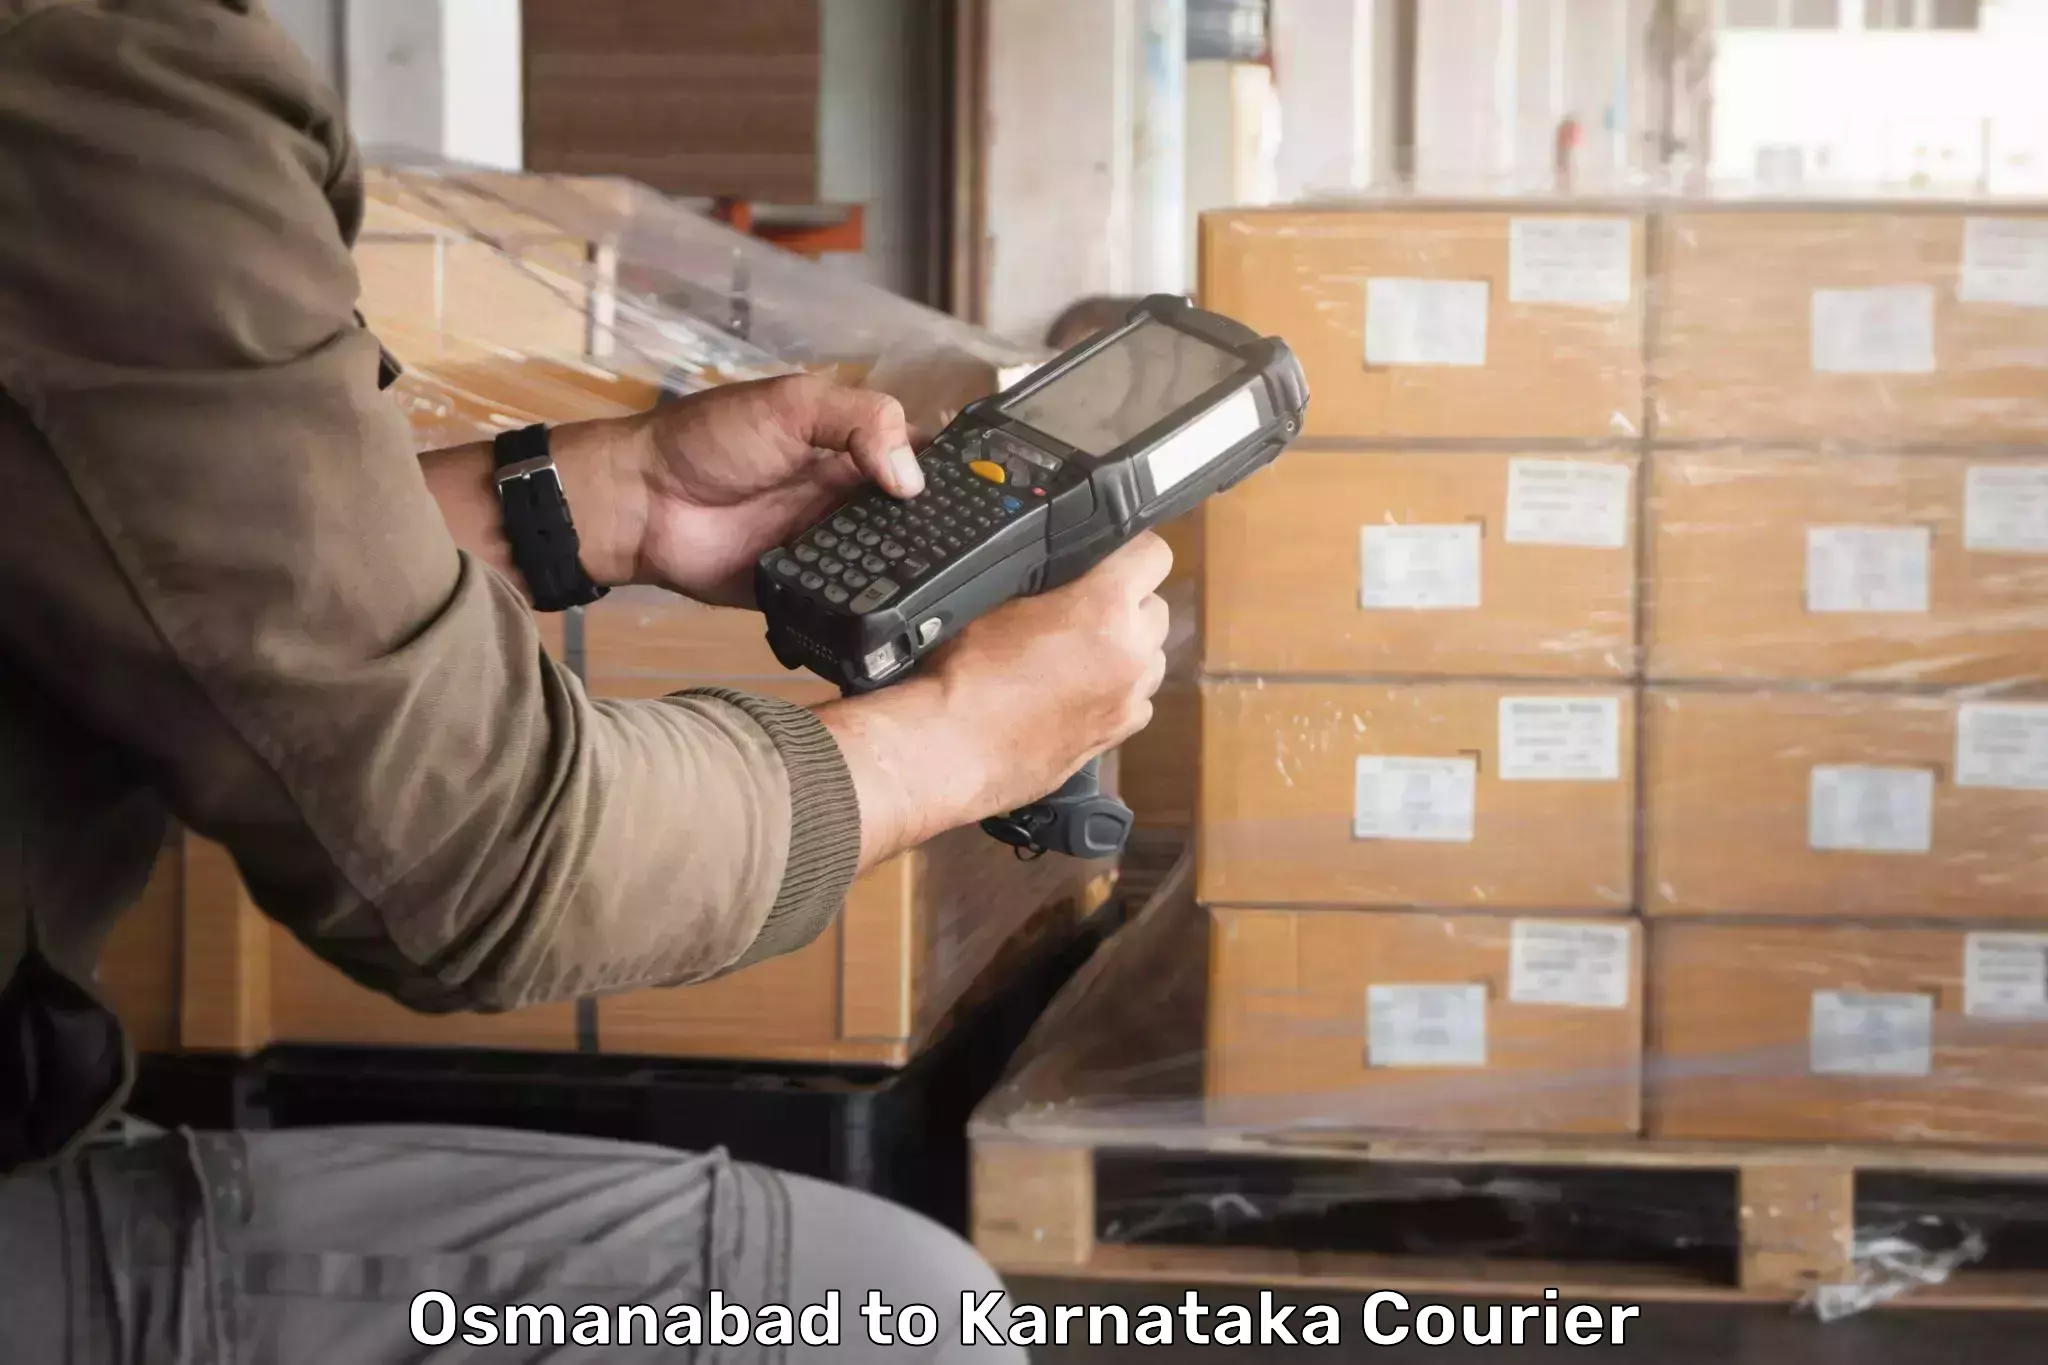 Global logistics network Osmanabad to Karnataka